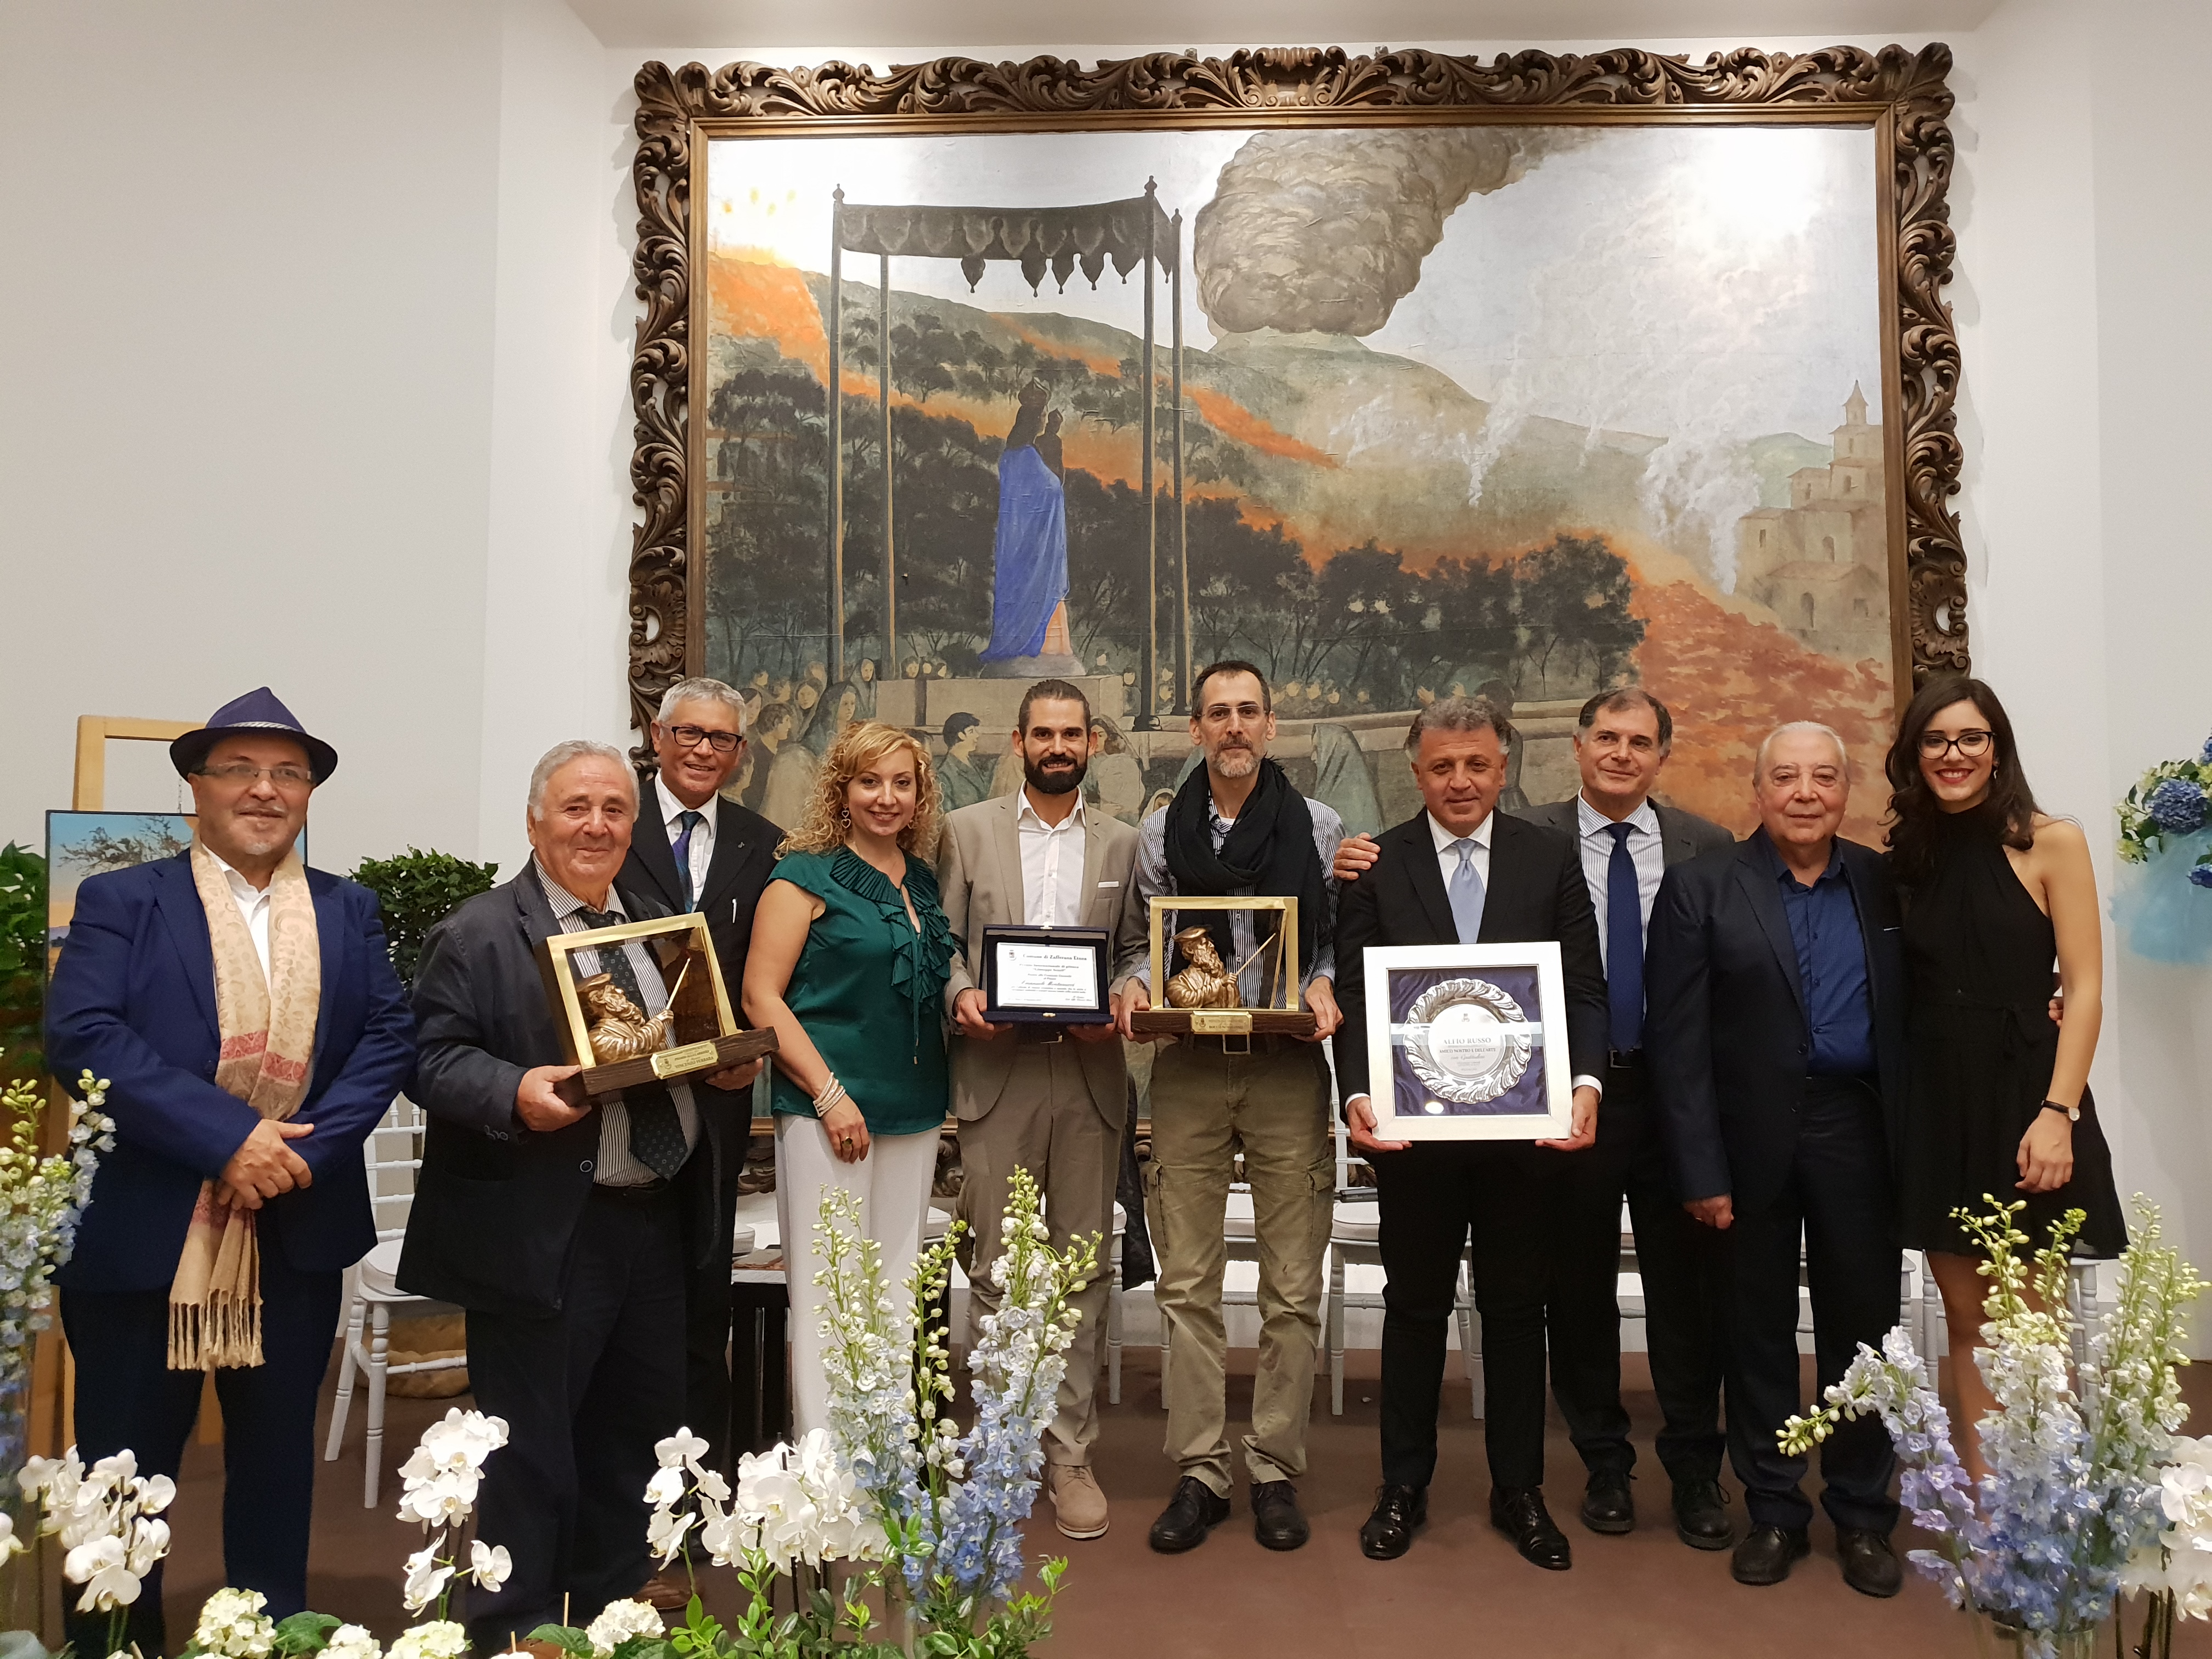 Premio Sciuti 2018 - il sindaco di Zafferana, Alfio Russo col direttore artistico Giansiracusa, l'assessore Torrisi ed i premiati